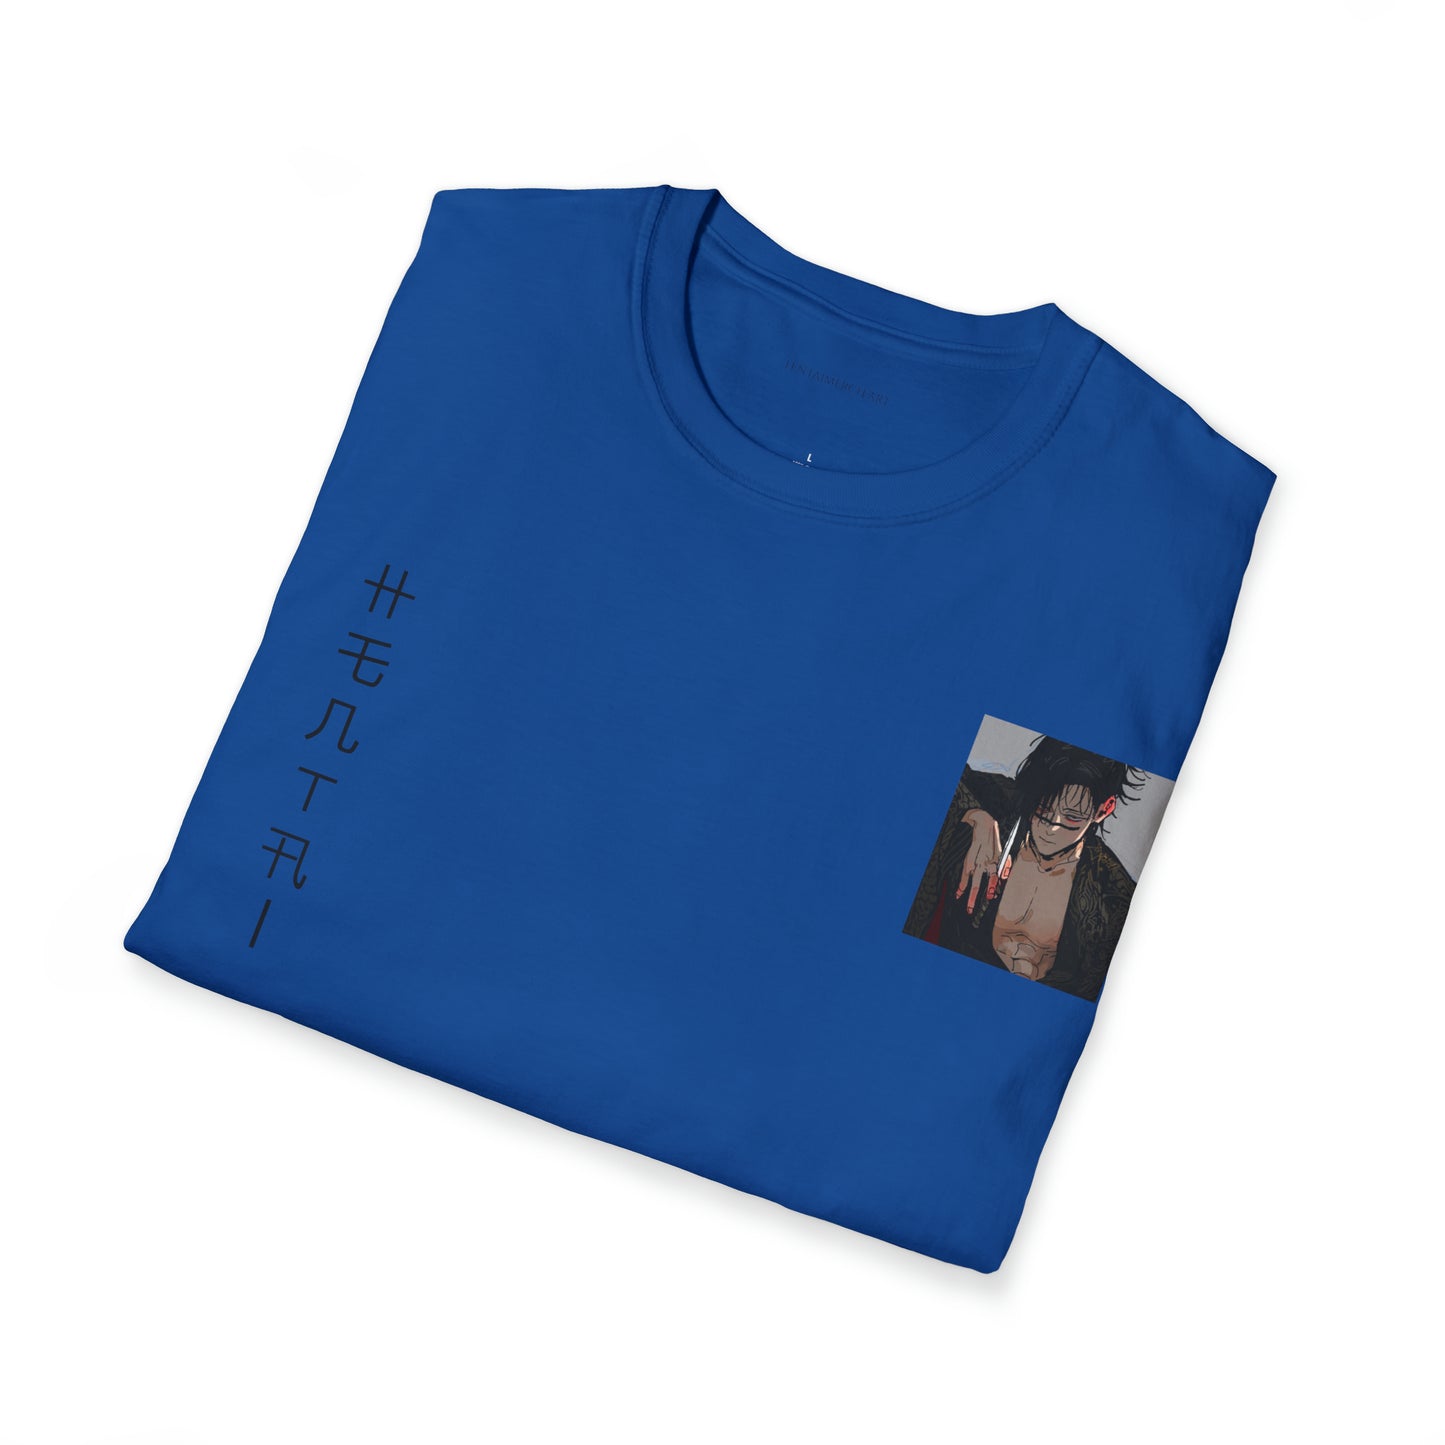 Hentai is Art [Design #2] - Unisex Softstyle T-Shirt